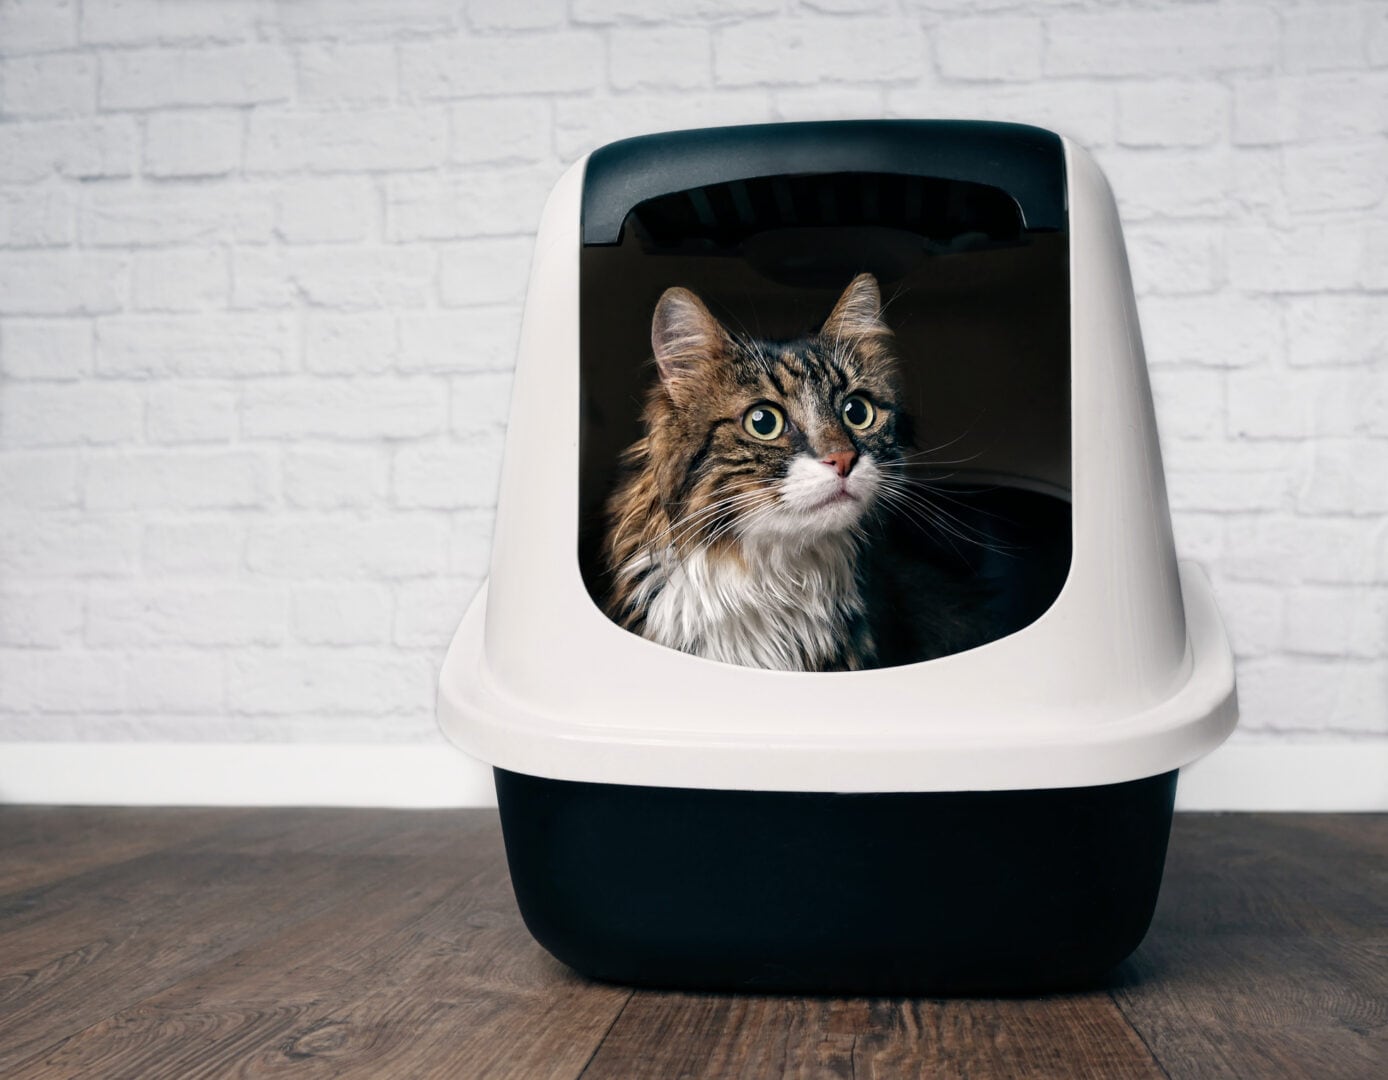 Kitty litter box basics for cat owners